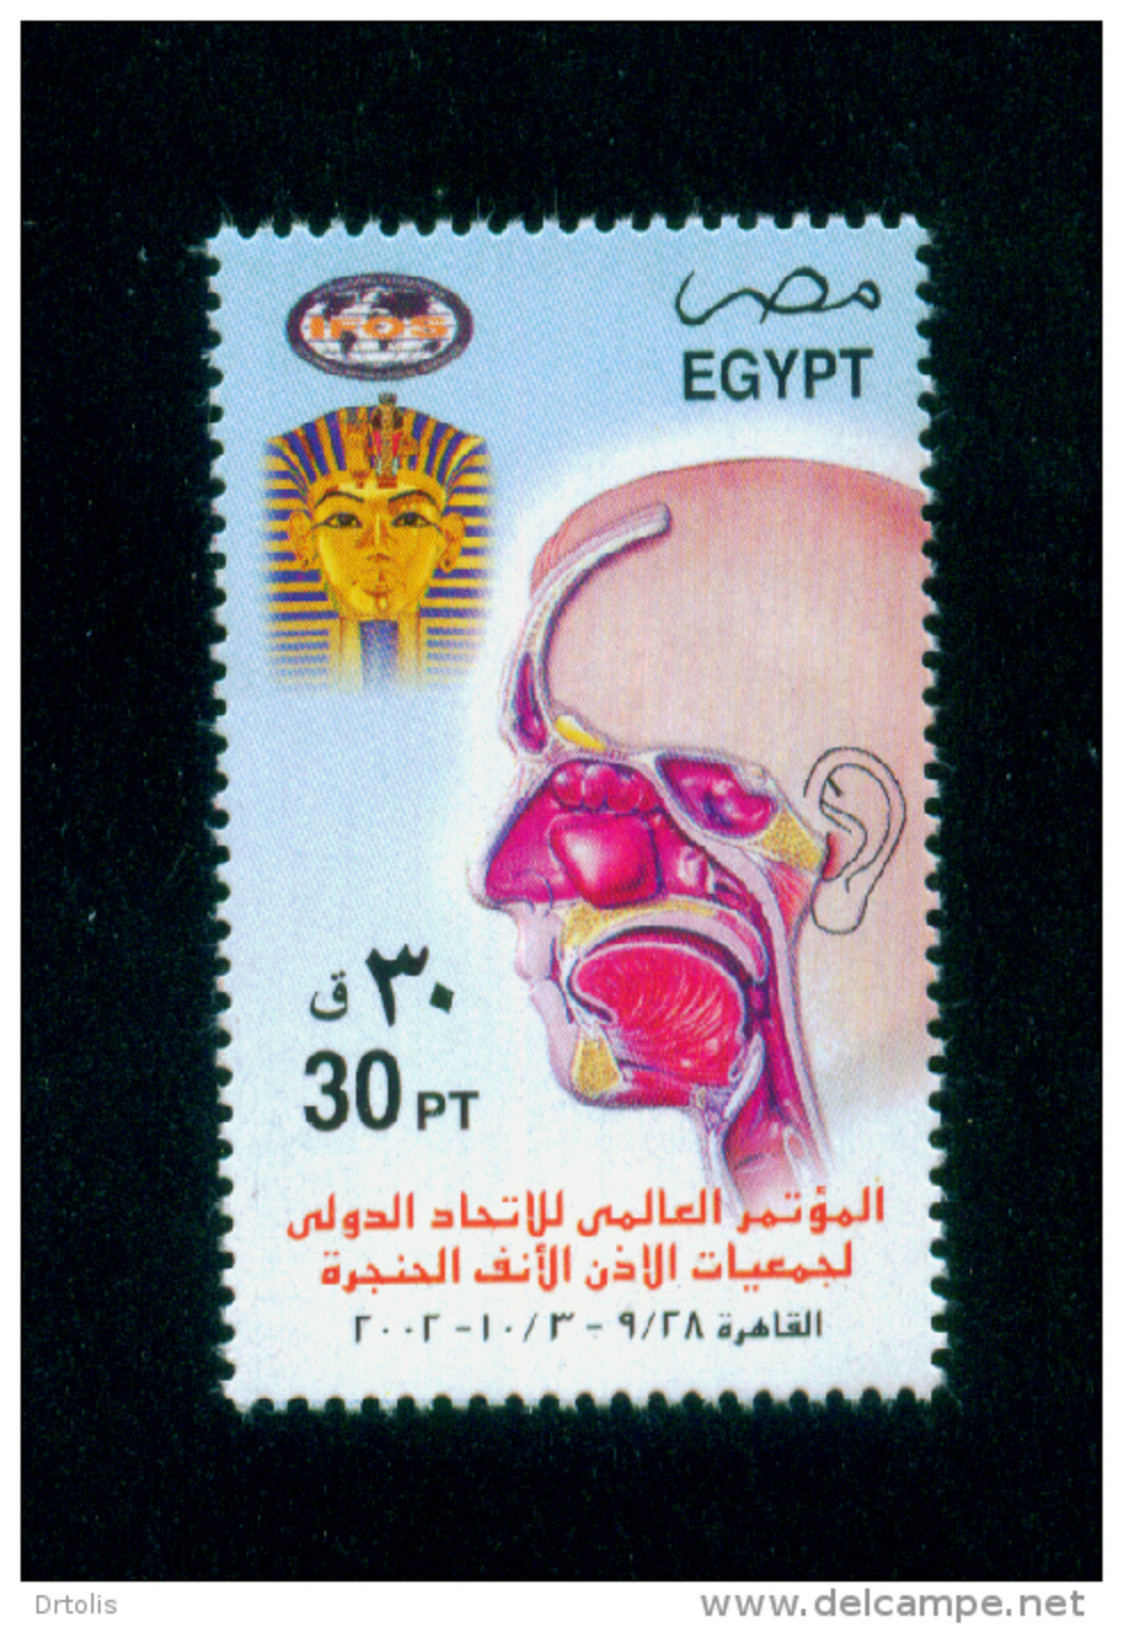 EGYPT / 2002 / MEDICINE / EAR / NOSE / OTO-RHINO LARYNGOLOGICAL SOCIETIES / IFOS / EGYPTOLOGY / TUTANKHAMUN / MNH / VF - Ungebraucht